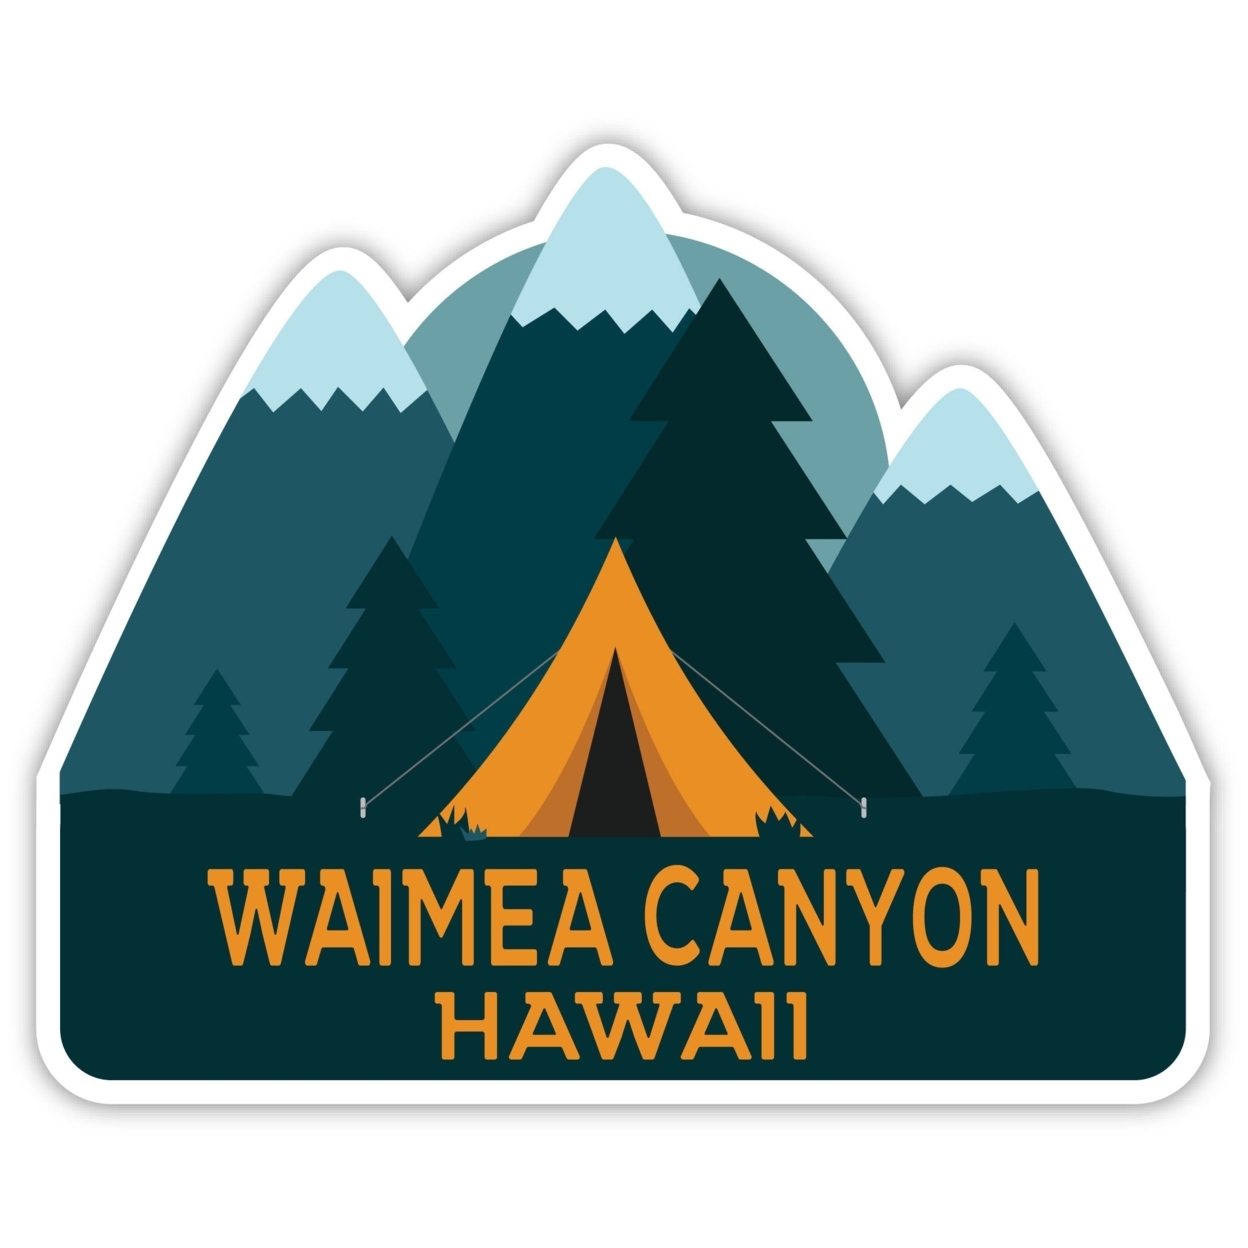 Waimea Canyon Hawaii Souvenir Decorative Stickers (Choose Theme And Size) - Single Unit, 2-Inch, Tent